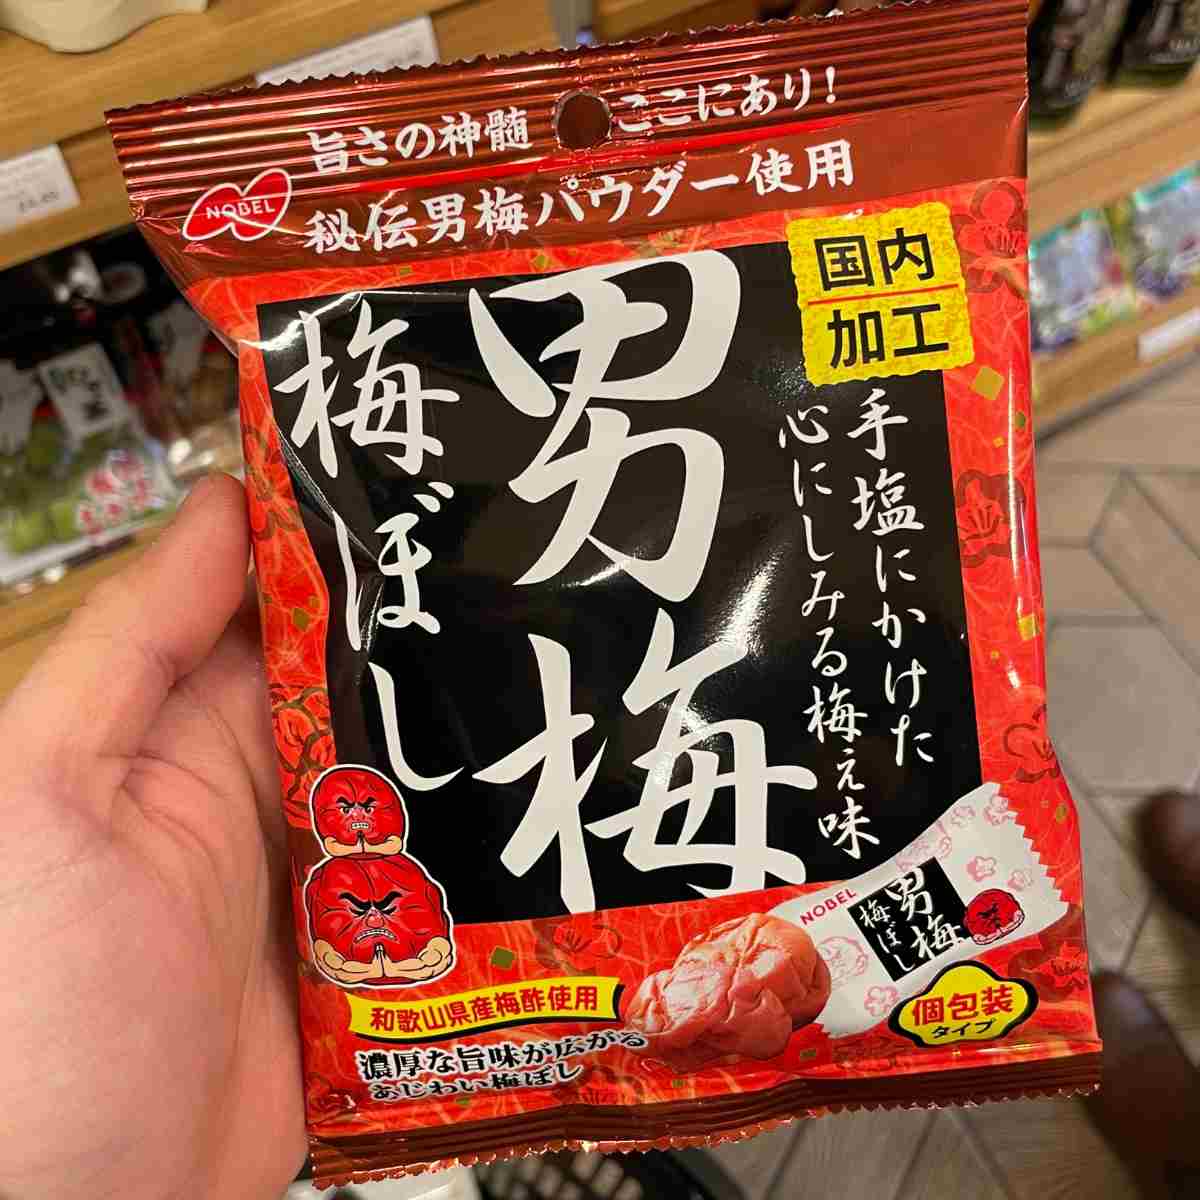 Otoko ume gummy